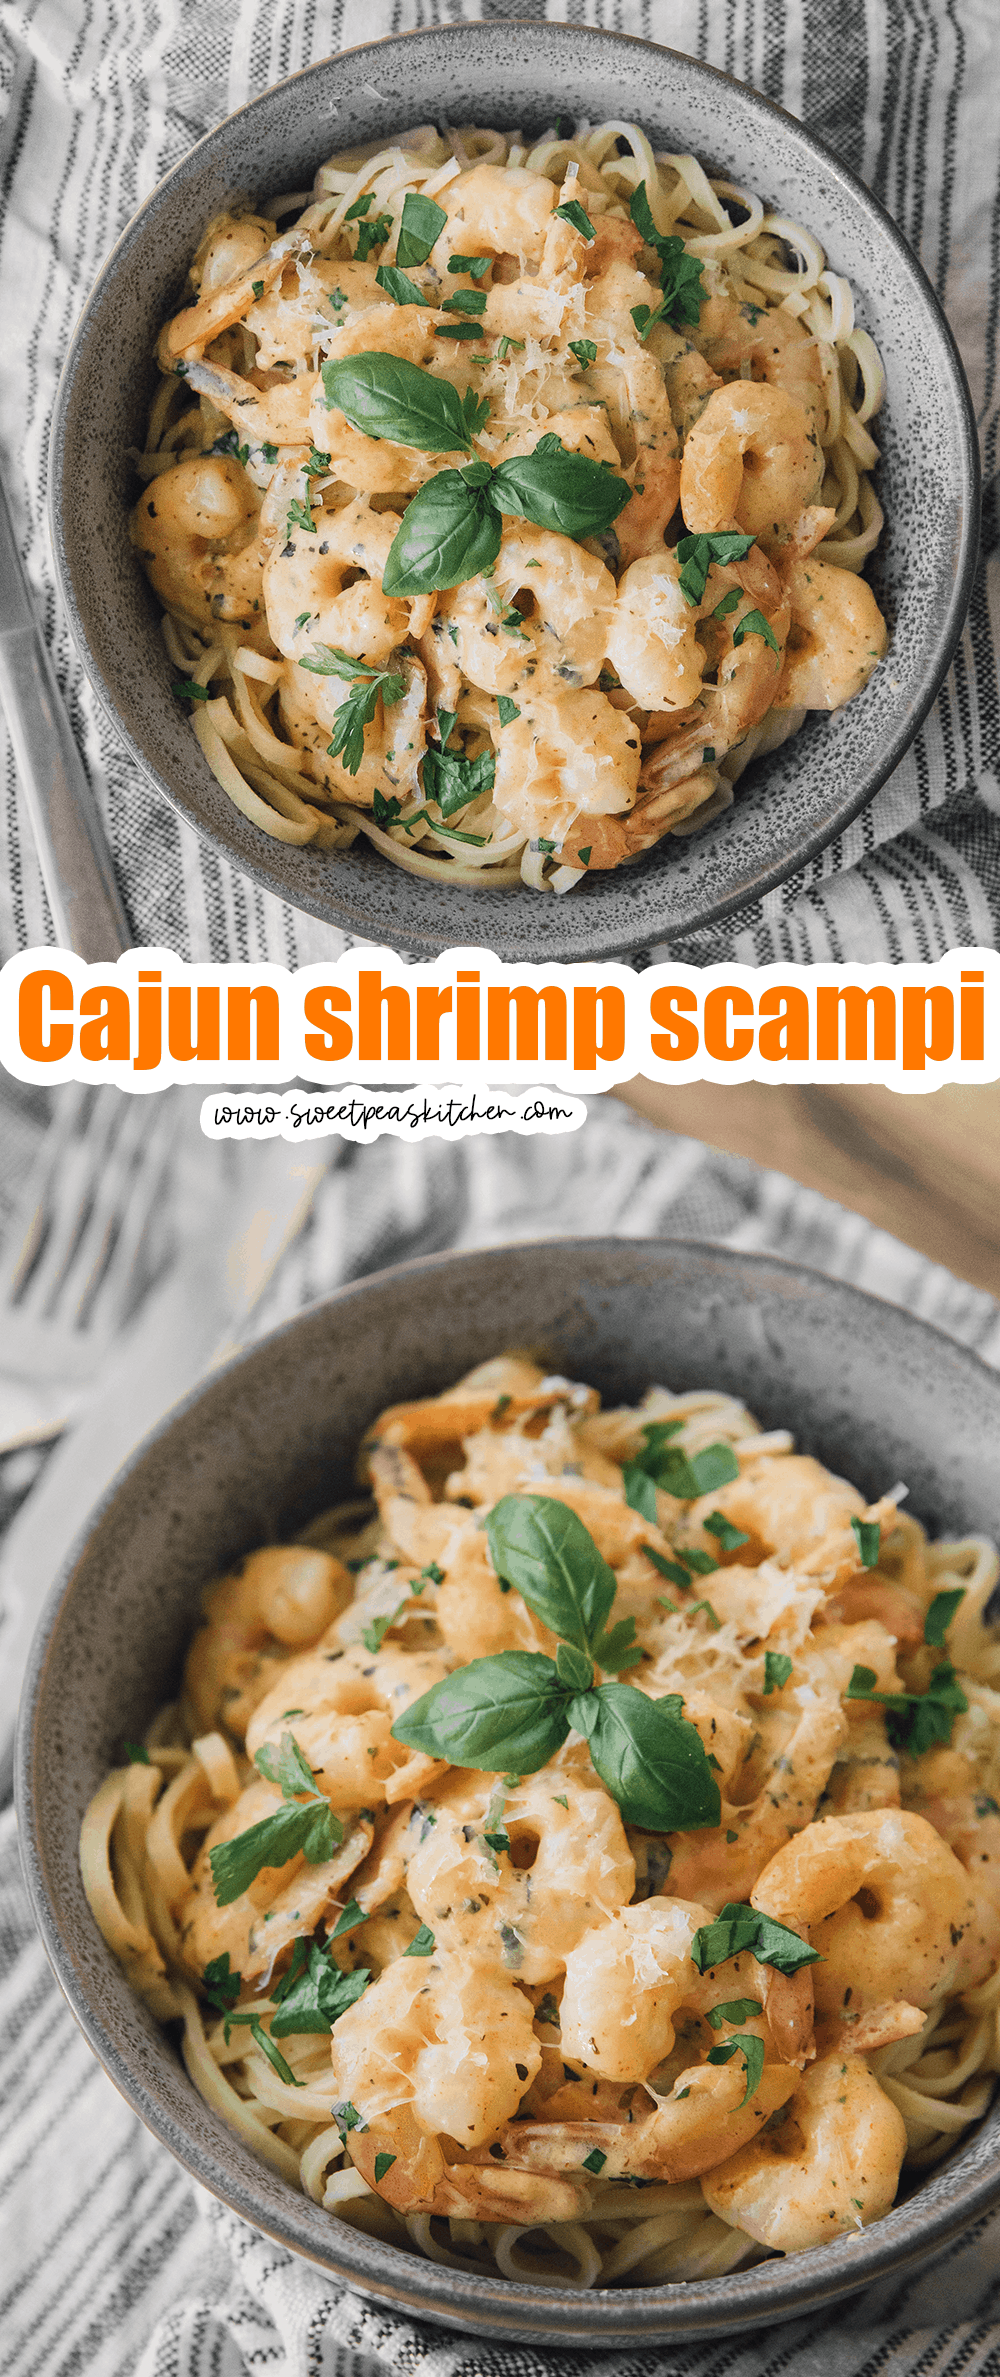 Cajun shrimp scampi on pinterest